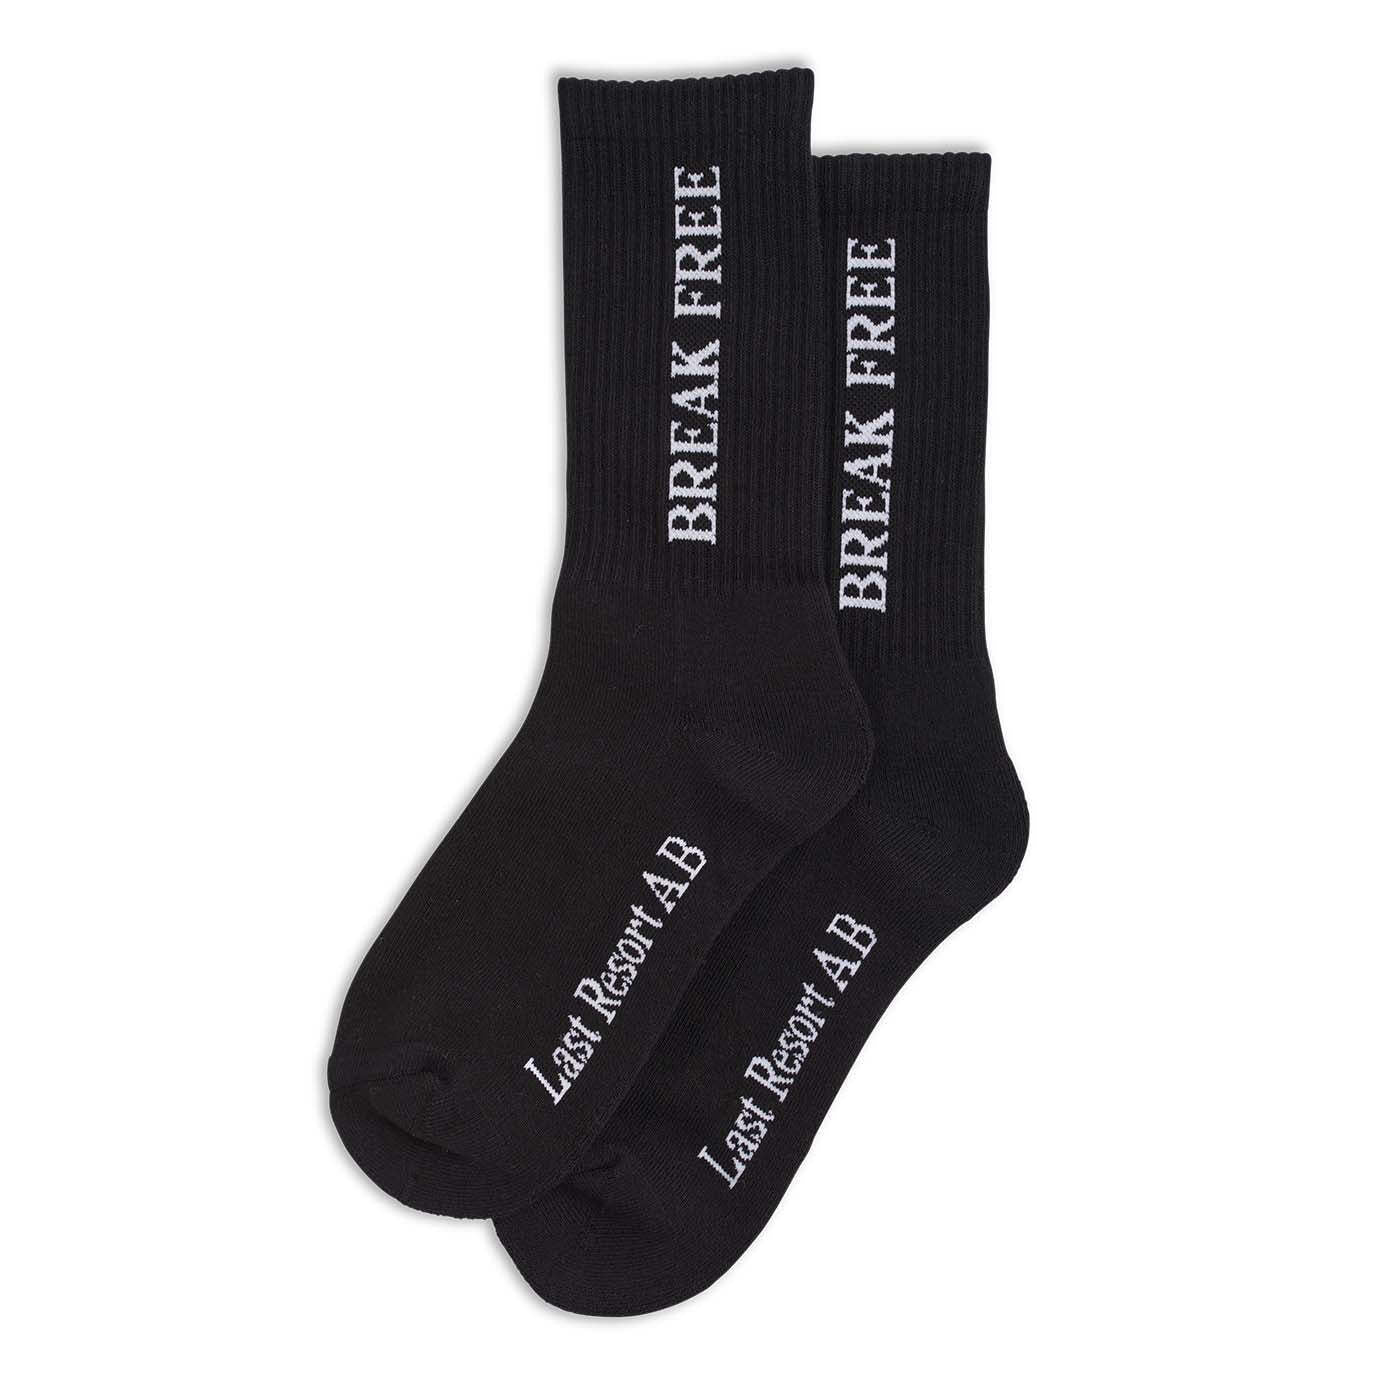 Breakfree Socks, Black